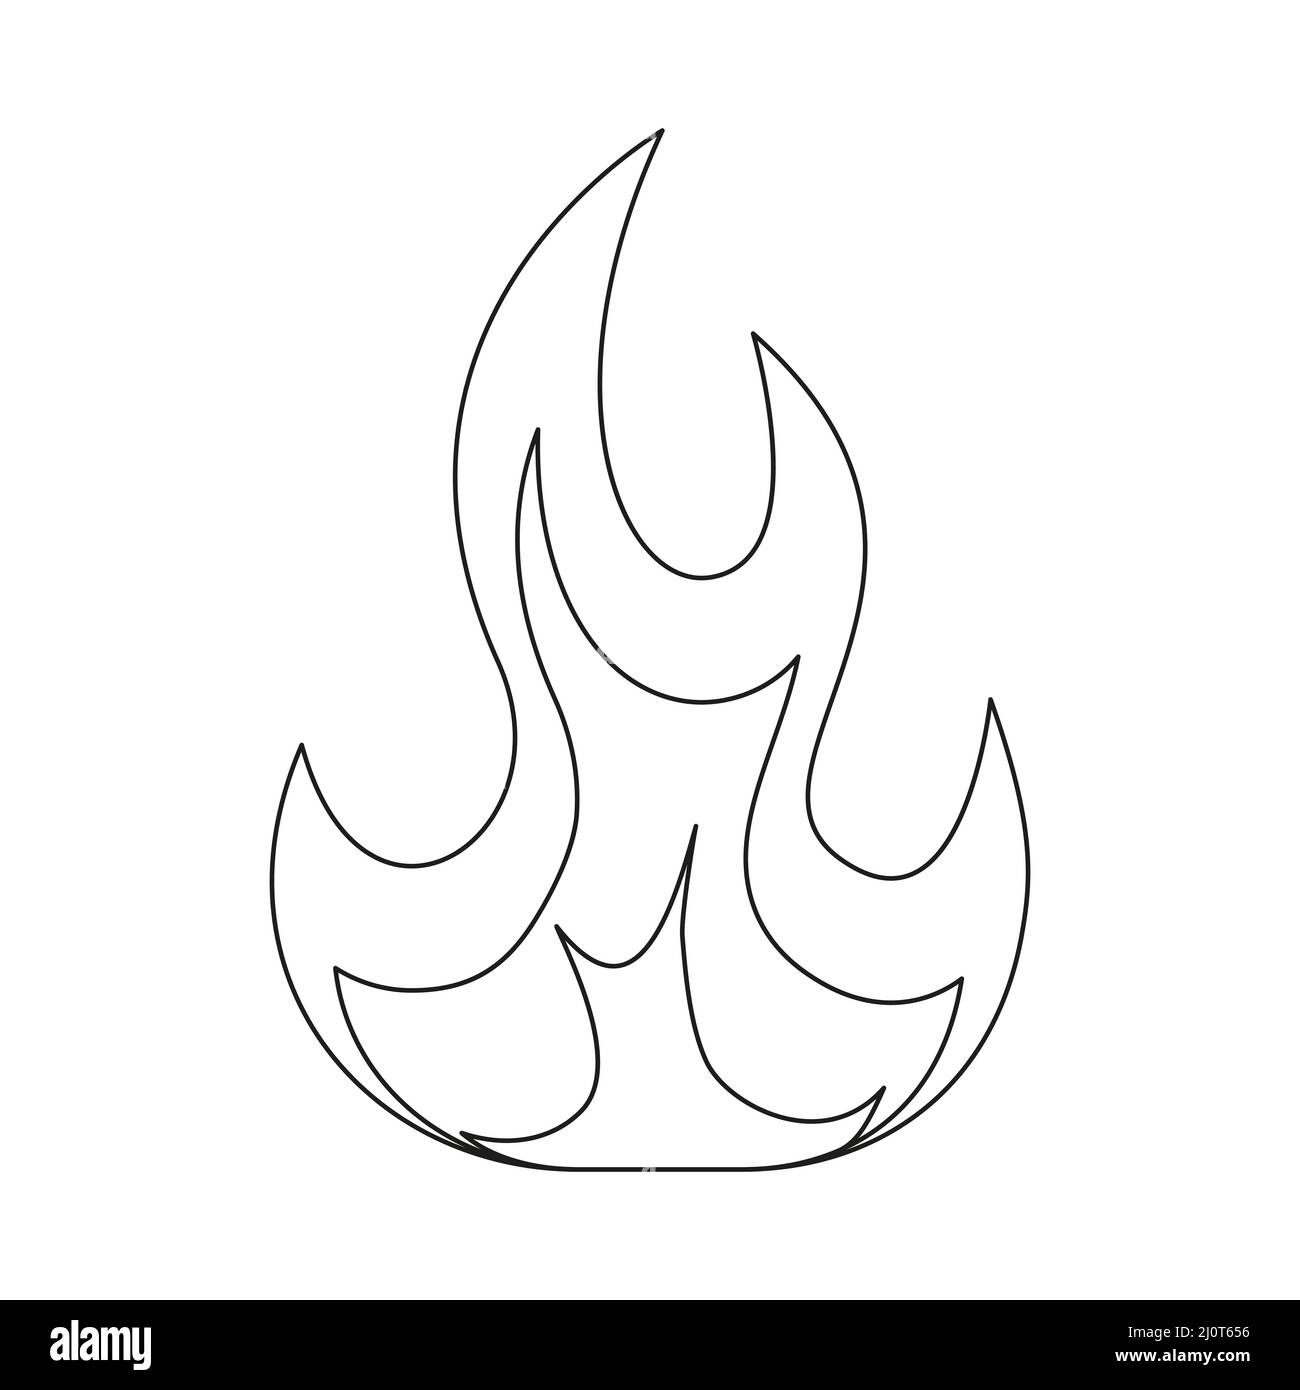 Fire line symbol. Fire flame outline shape. Warning linear sign